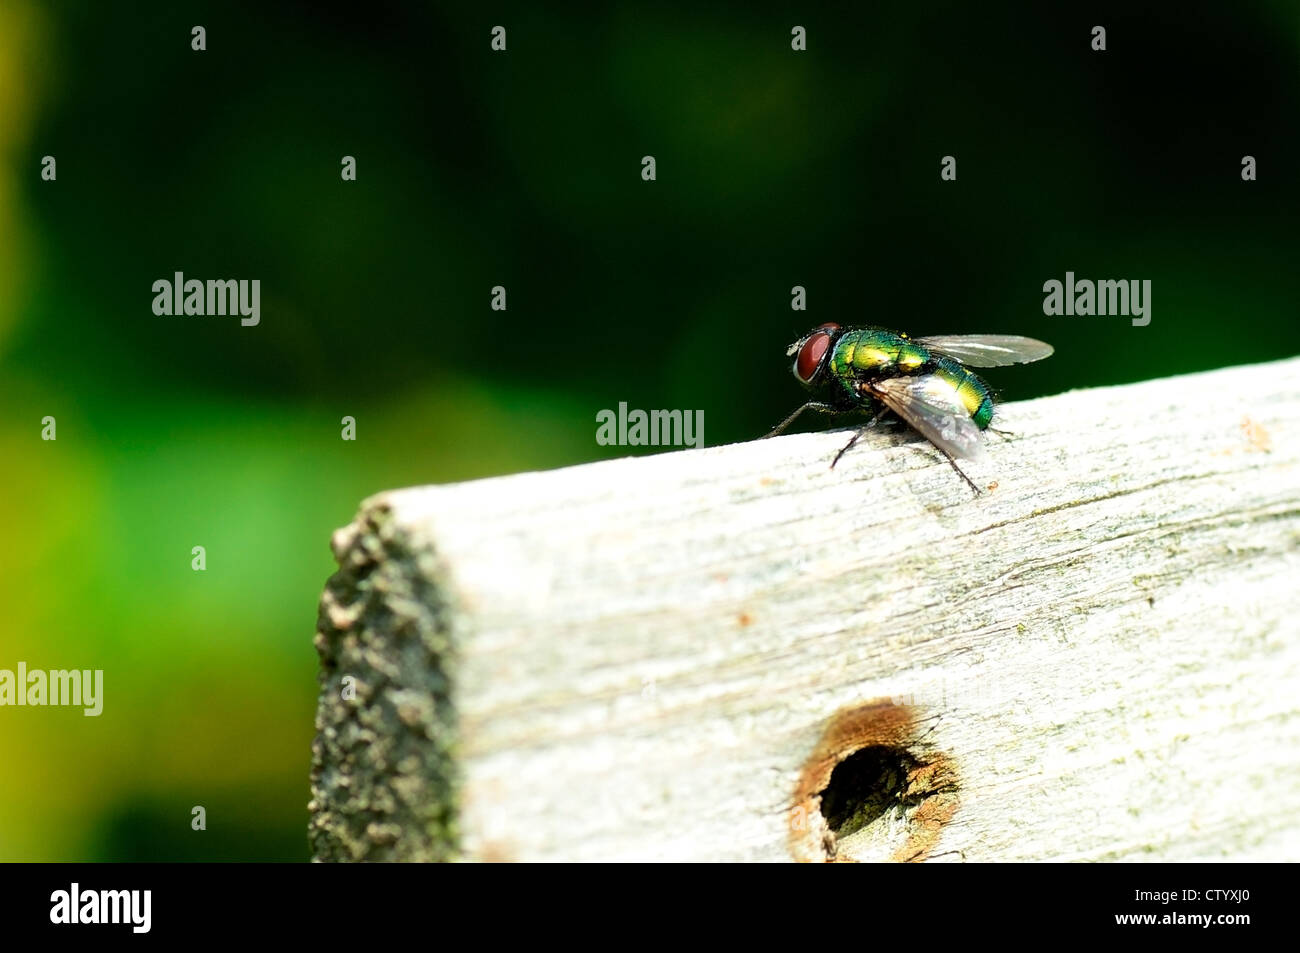 A shiny green bottle fly sitting on a plank Stock Photo